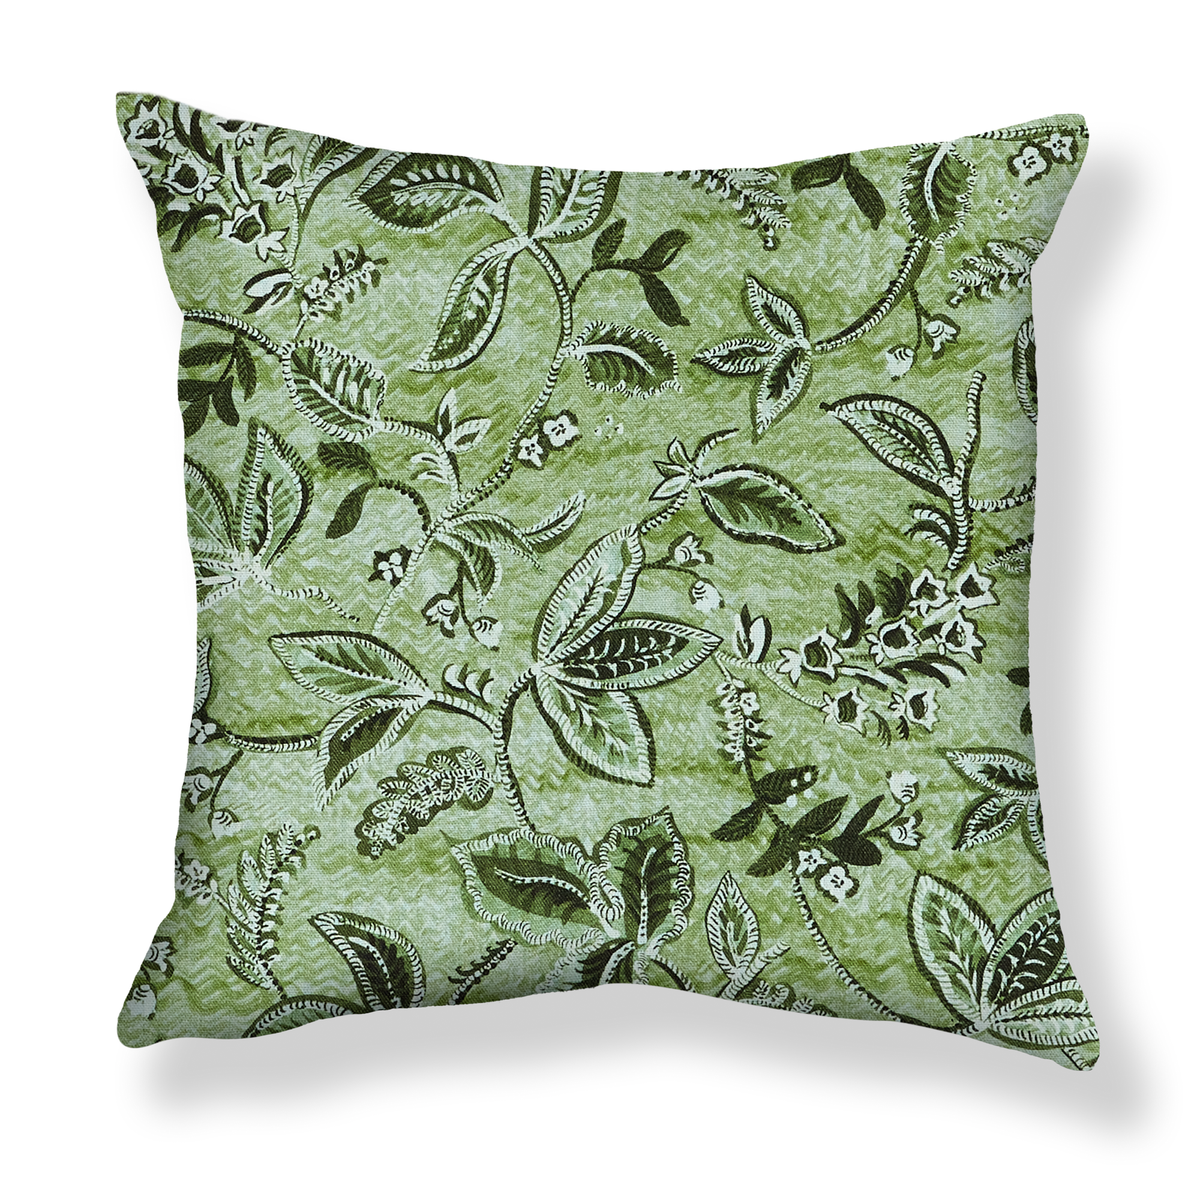 Textured Botanical Pillow in Green